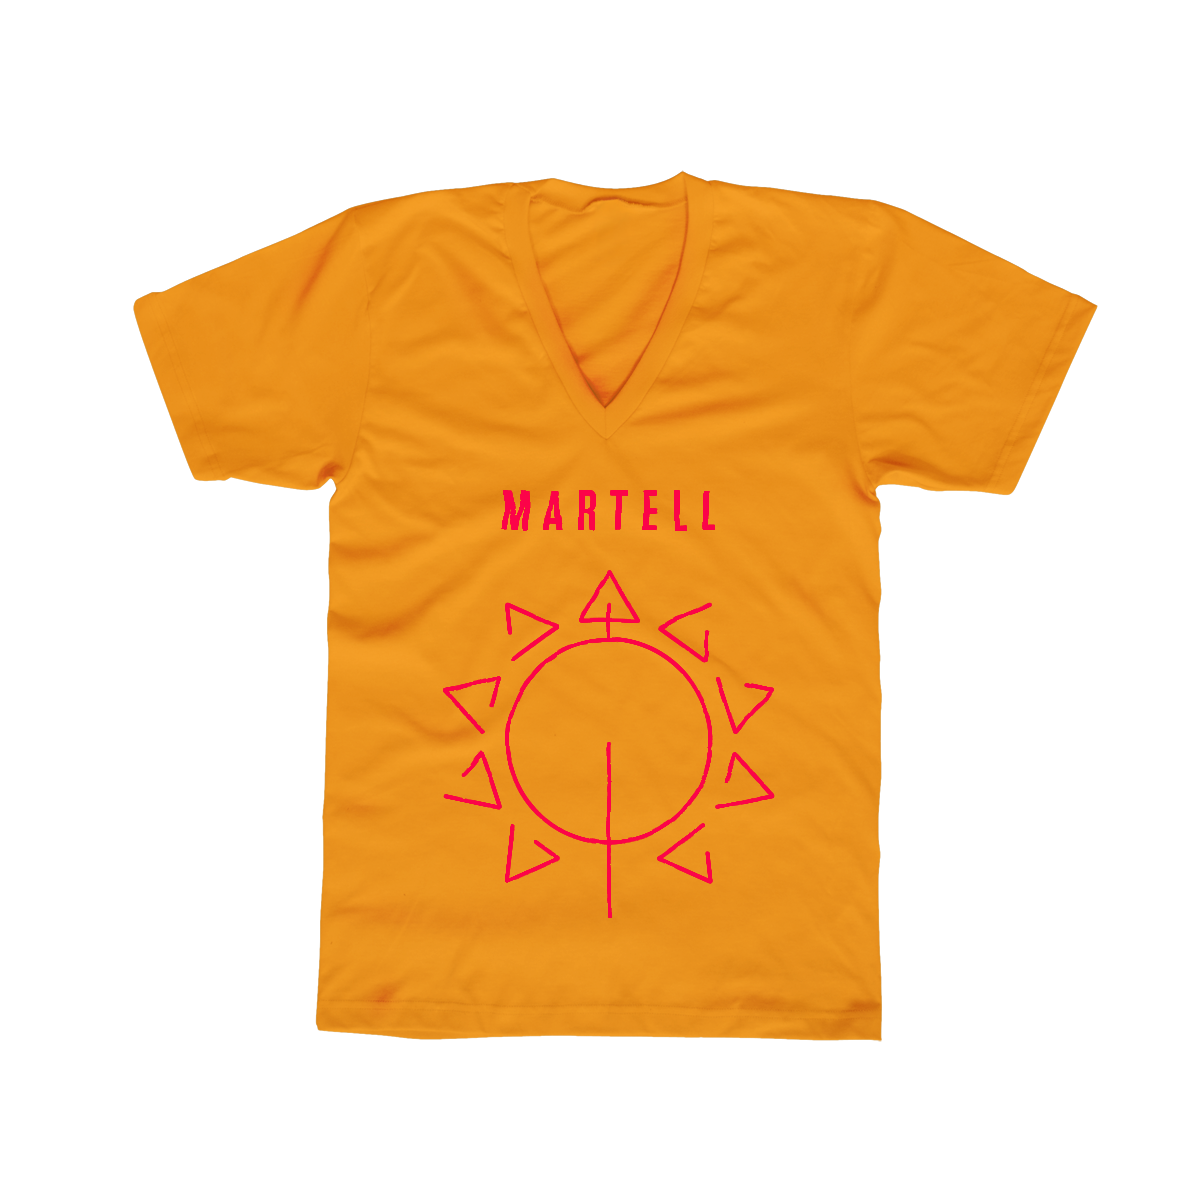 martell-3